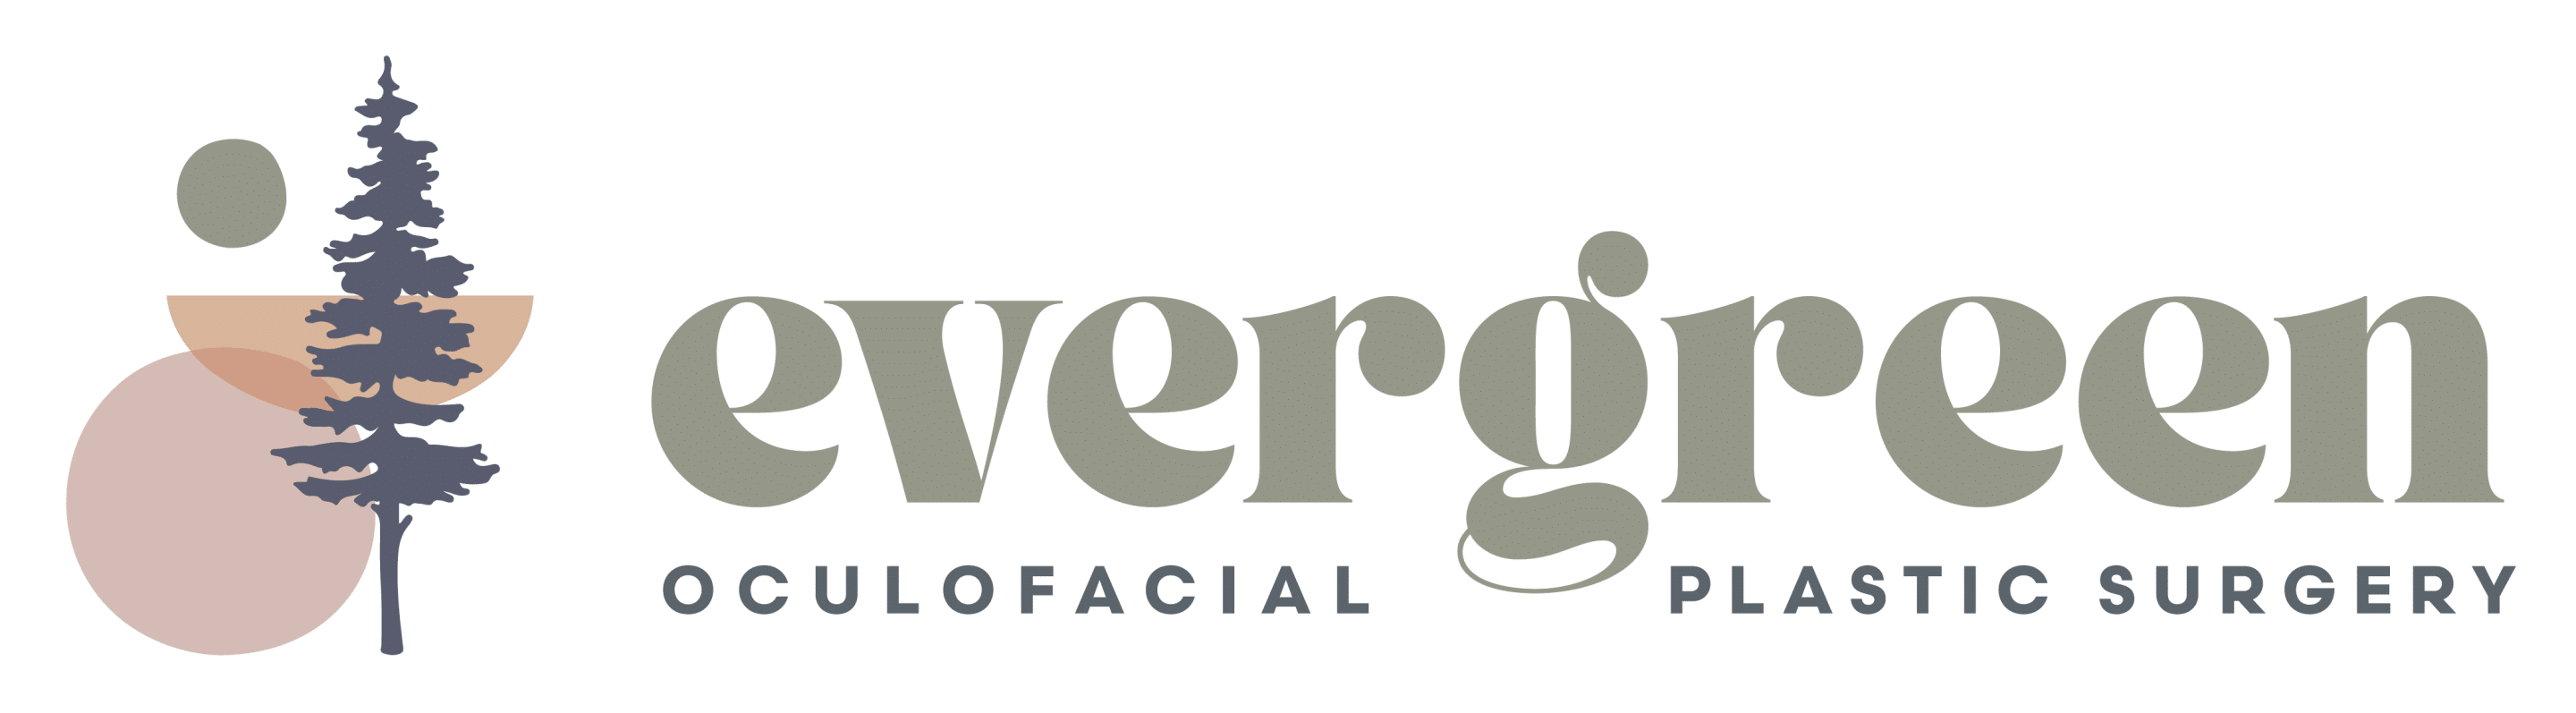 Evergreen Oculofacial Plastic Surgery Logo